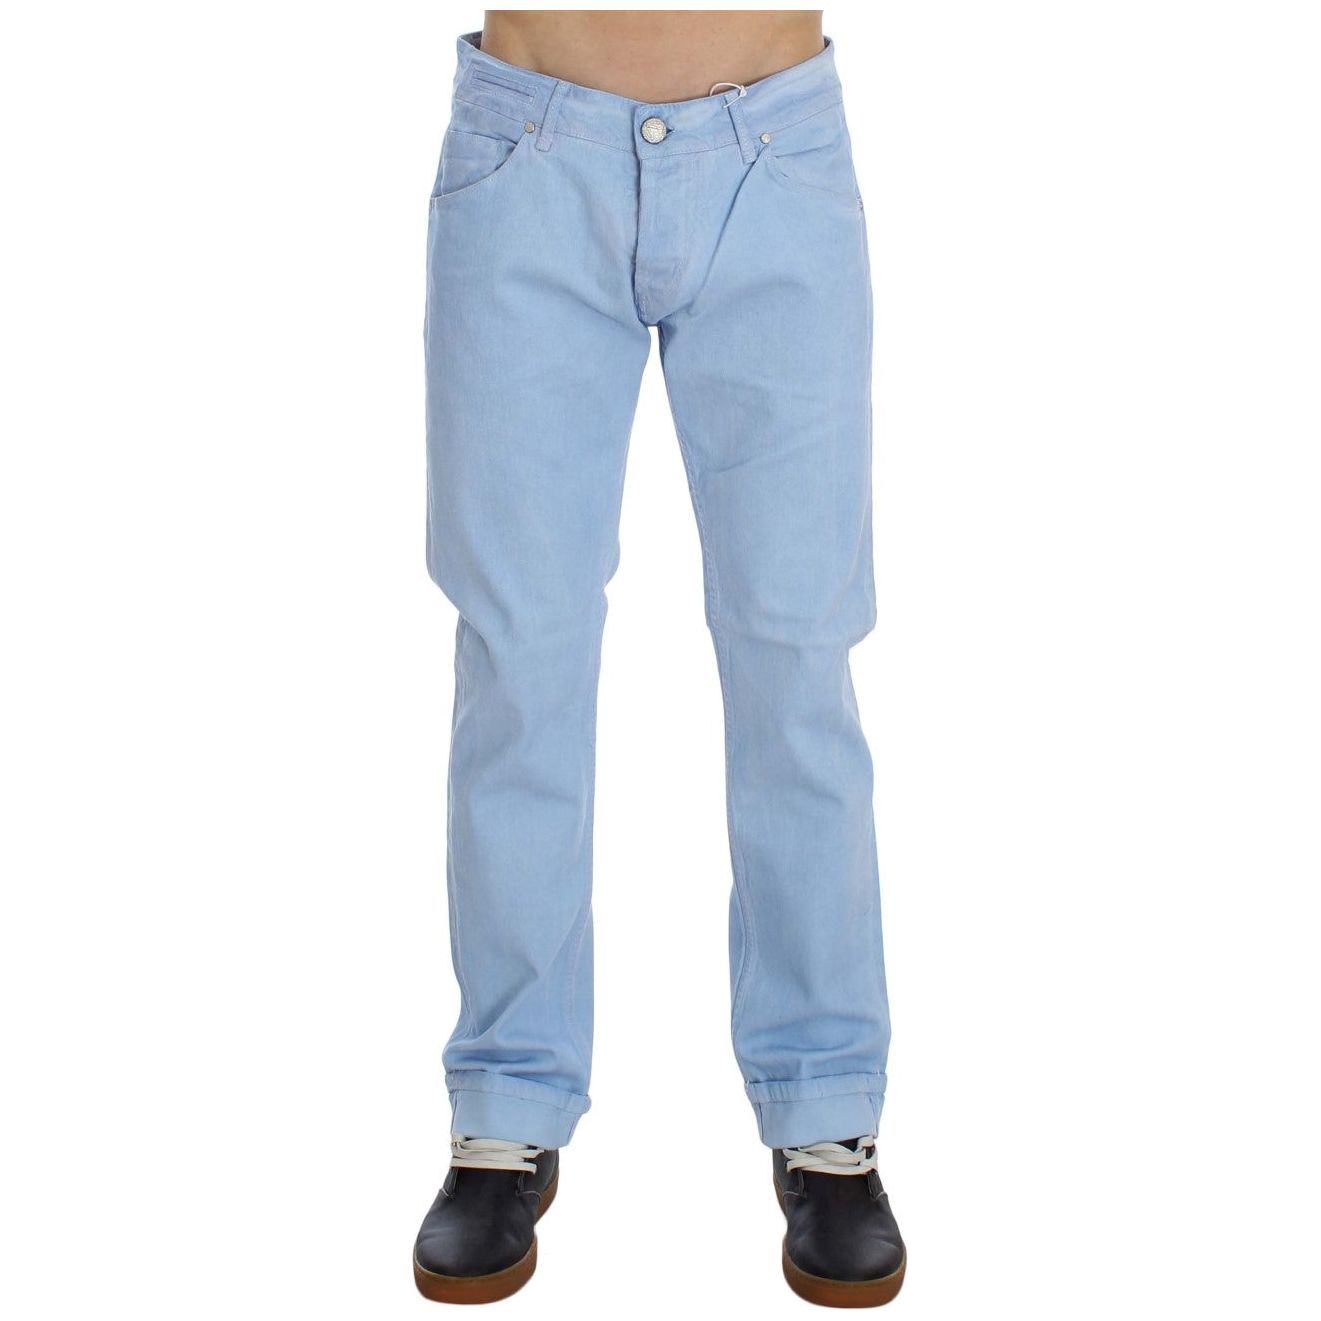 Acht Elegant Low Waist Regular Fit Men's Jeans blue-cotton-stretch-low-waist-fit-jeans 299172-blue-cotton-stretch-low-waist-fit-jeans-1.jpg